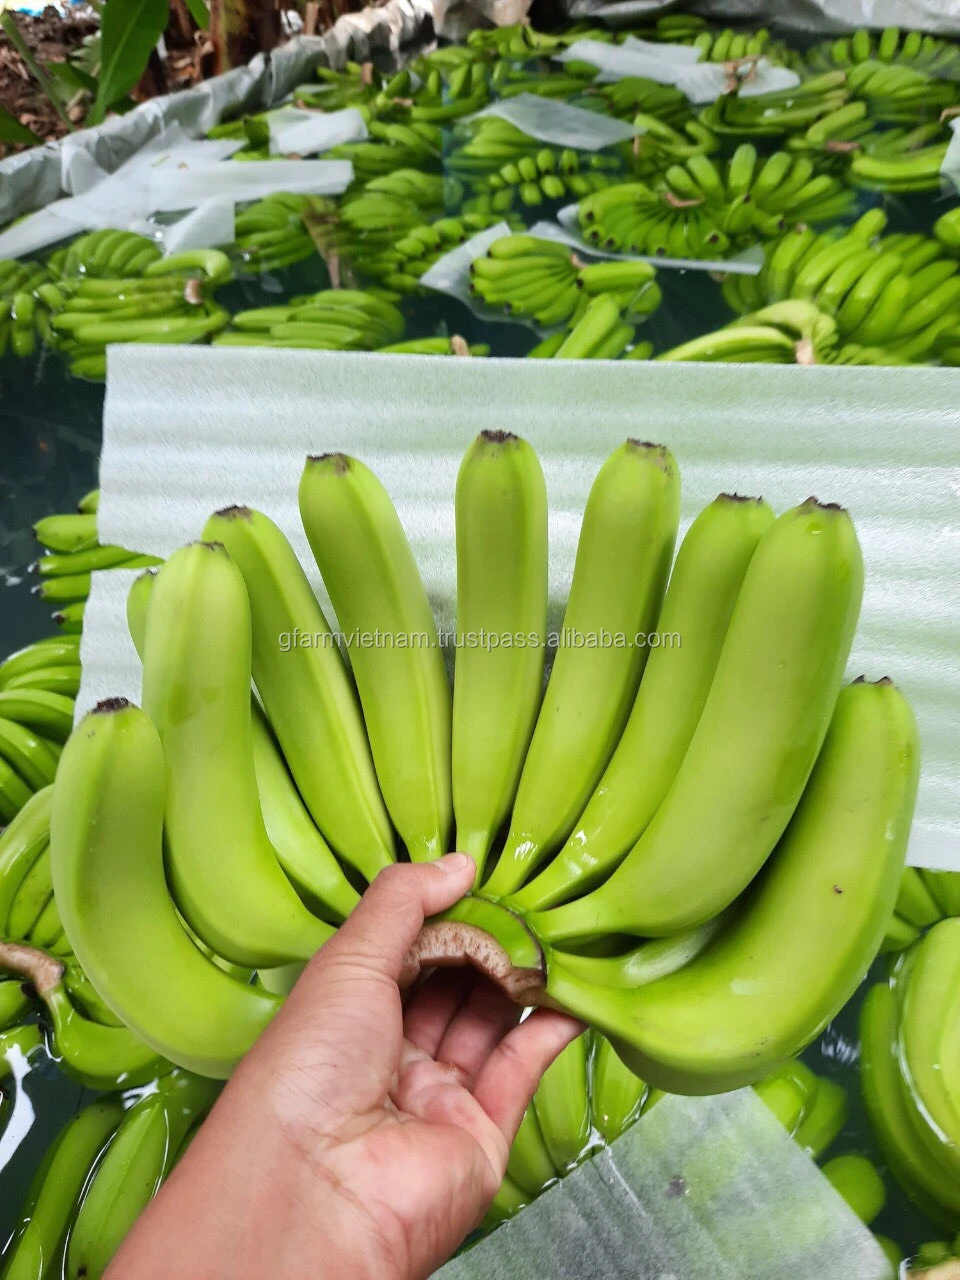 Wholesale price fresh green organic bananas in Vietnam season 2020